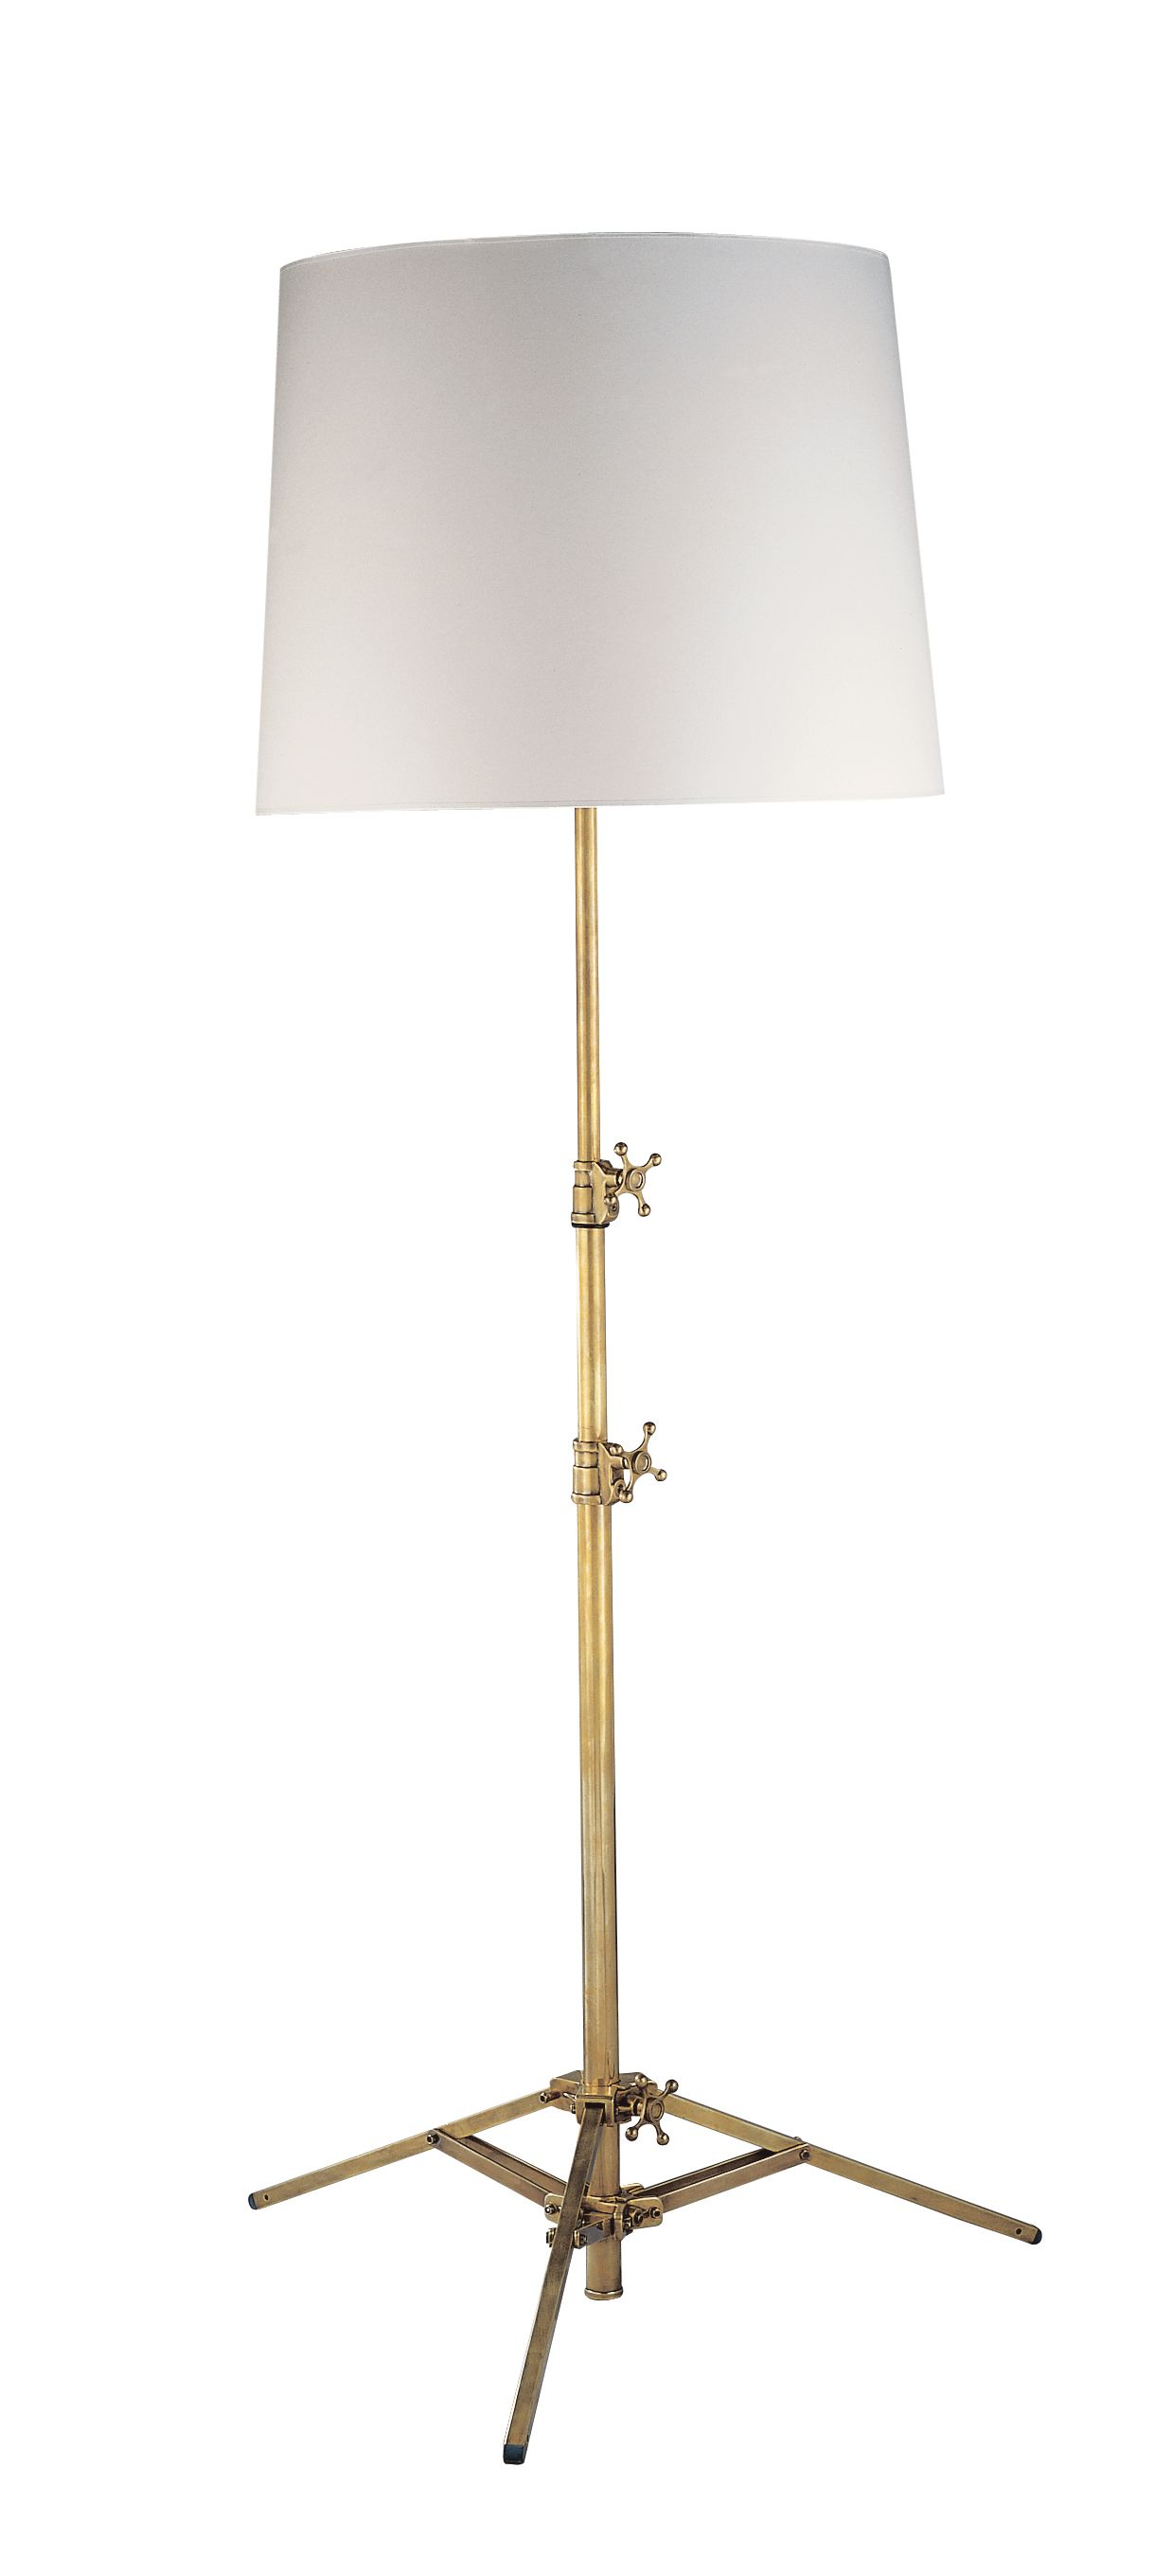 Studio Adjustable Floor Lamp With Large Shade Tob1010np regarding sizing 1238 X 2720